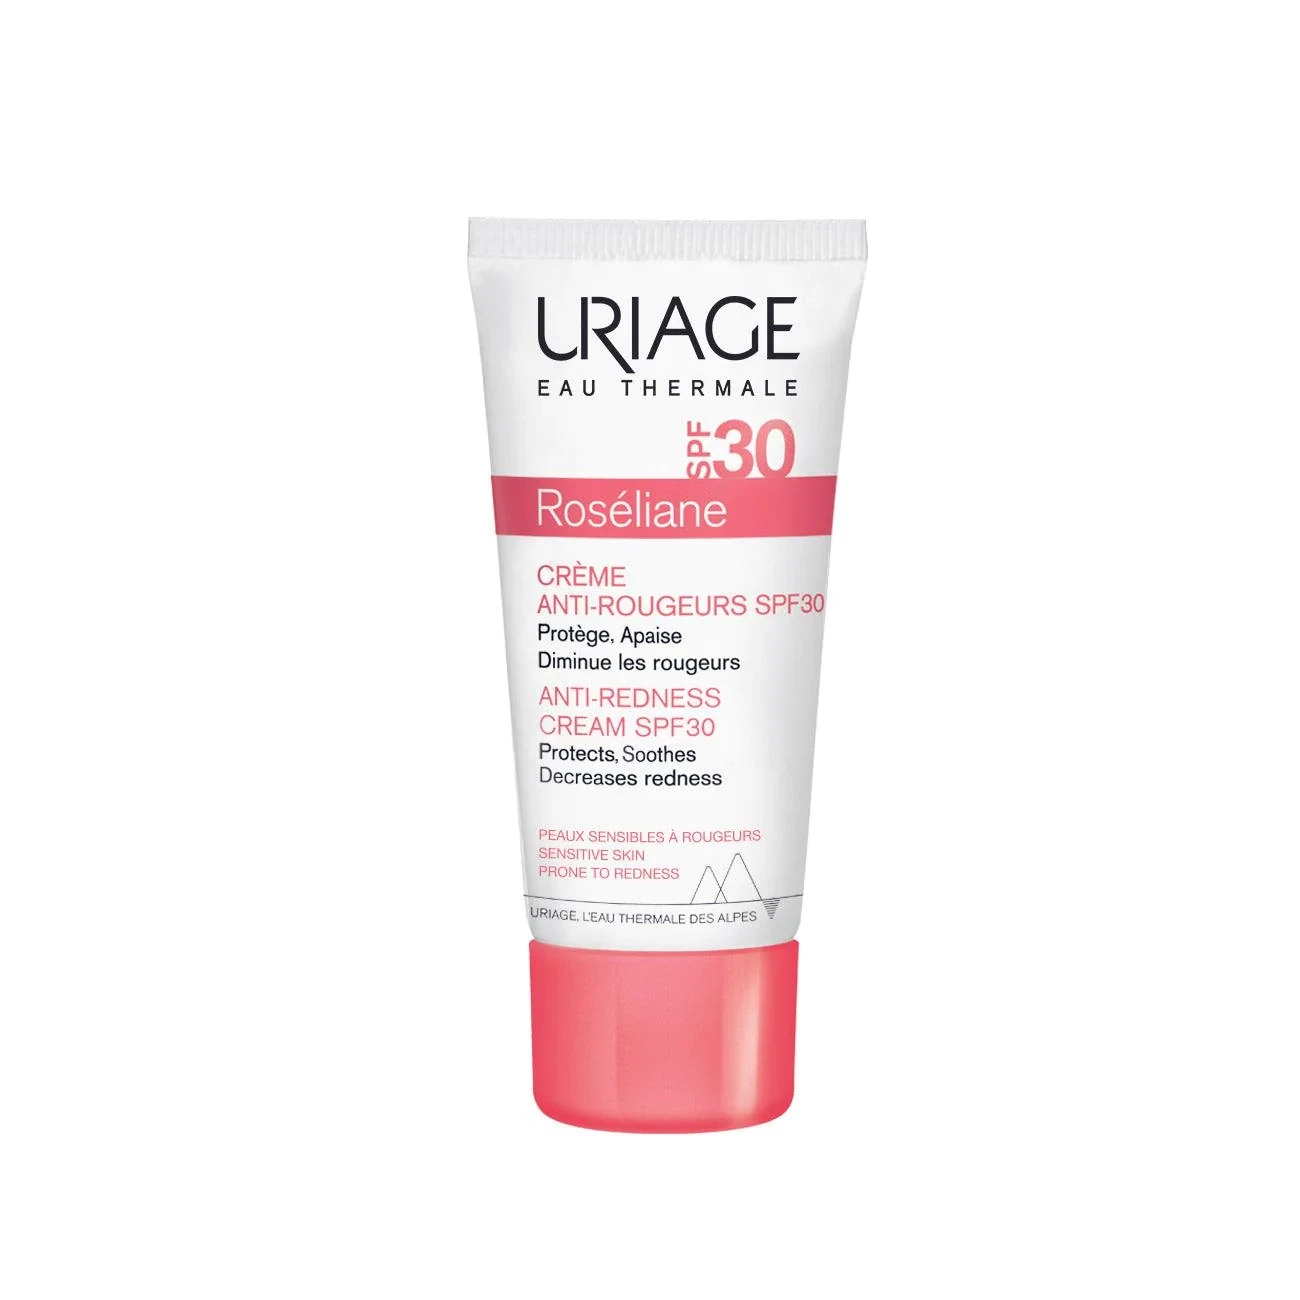 URIAGE - Roséliane Anti-Redness Cream SPF30 - Sensitive Skin Prone to Redness